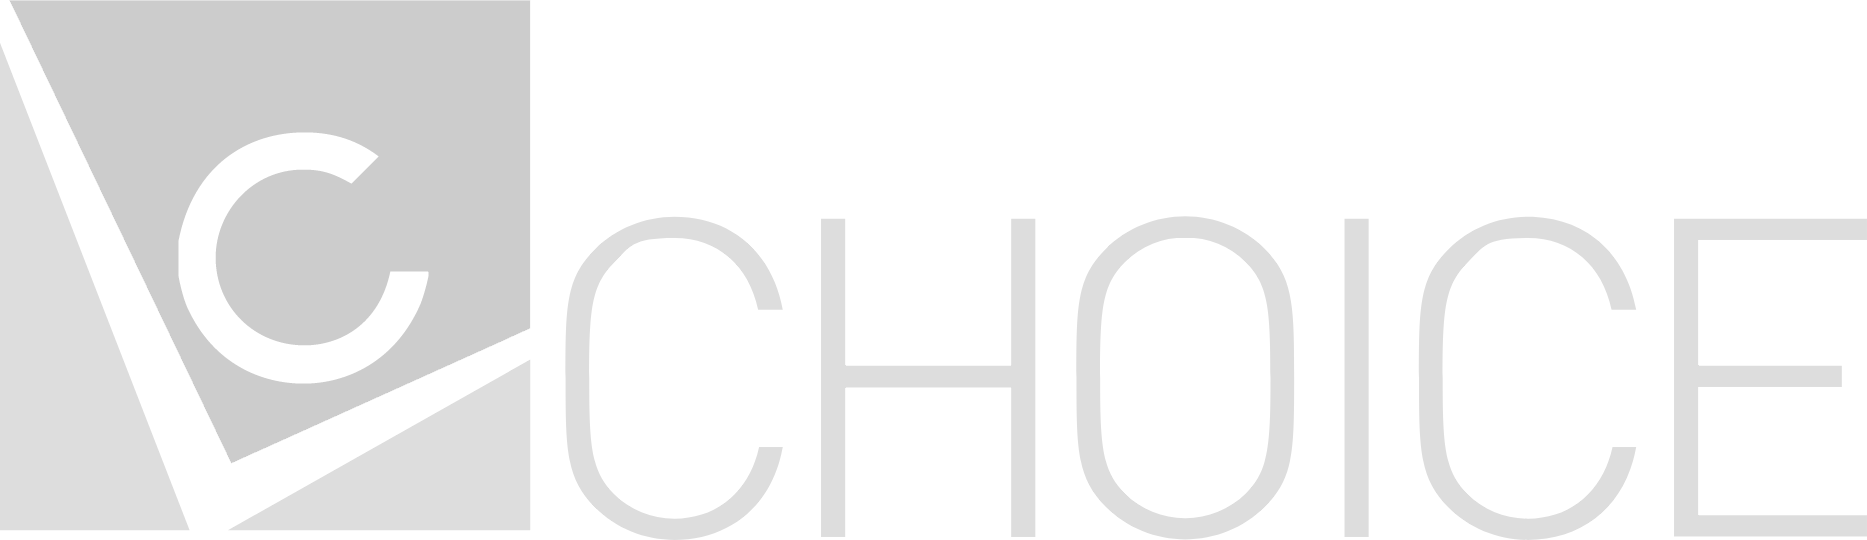 Leadership Choice - Leader in Executing Coaching & Leadership Training.